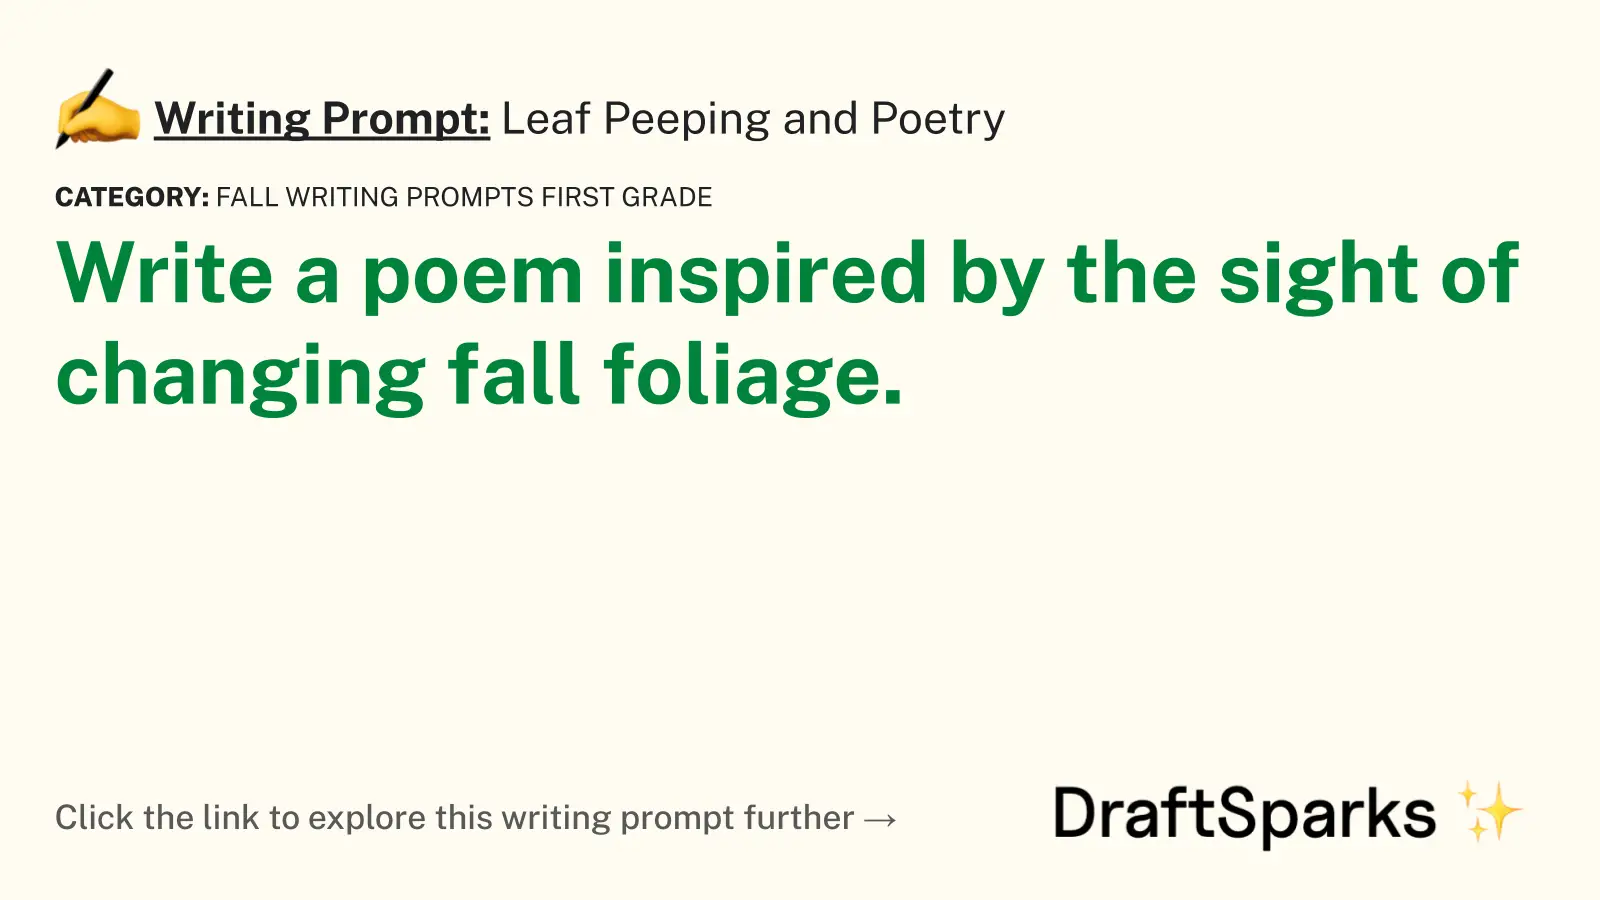 Leaf Peeping and Poetry